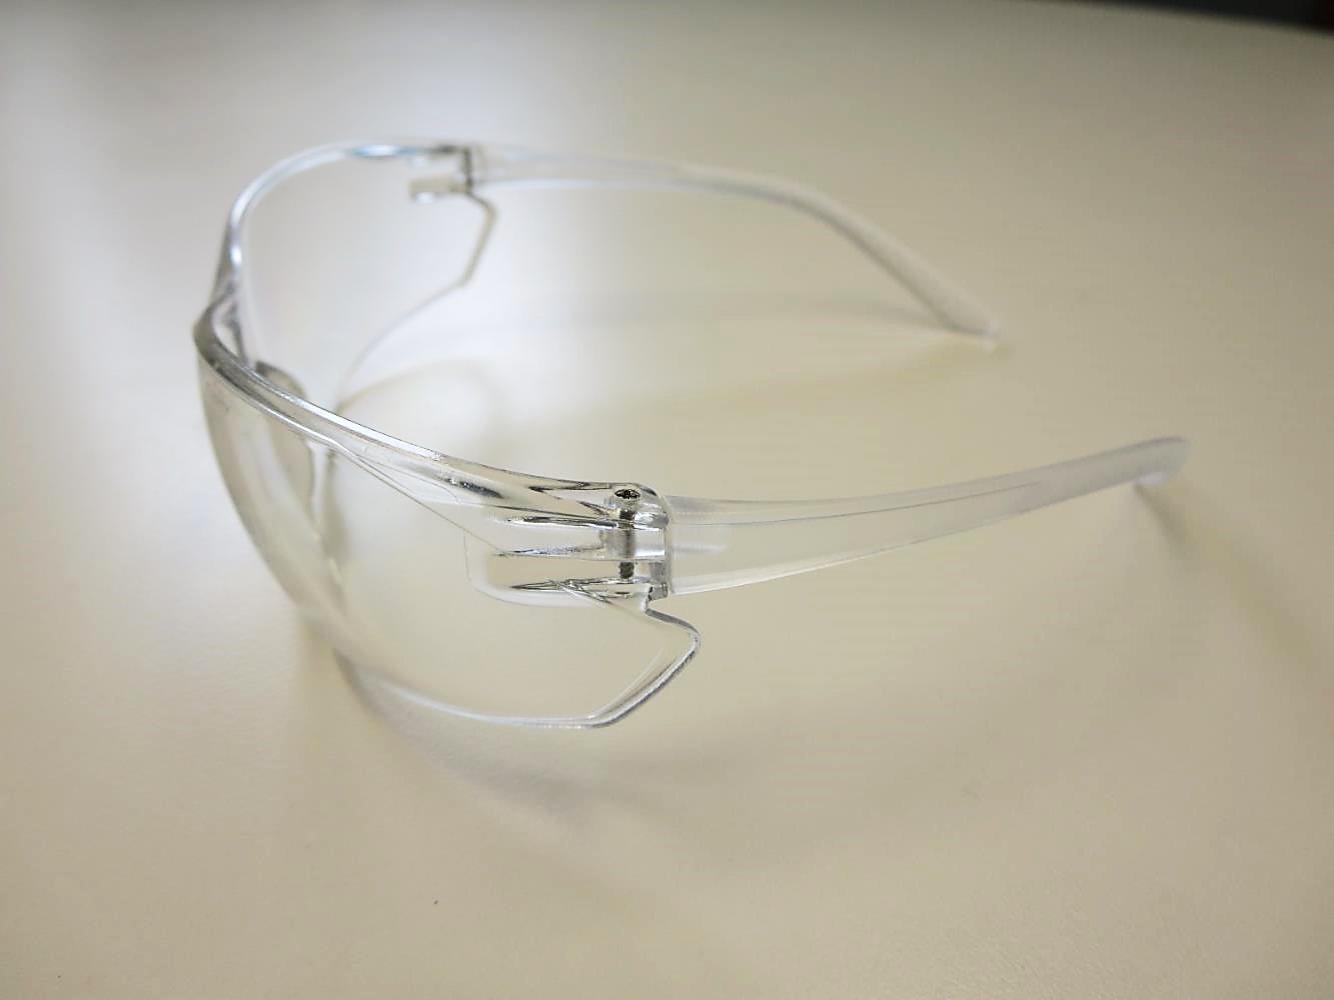 250-14-0520 PIP® Bouton Optical Zenon Ultra-Lyte™ Fogless® 3Sixty™ Coated Safety Glasses 